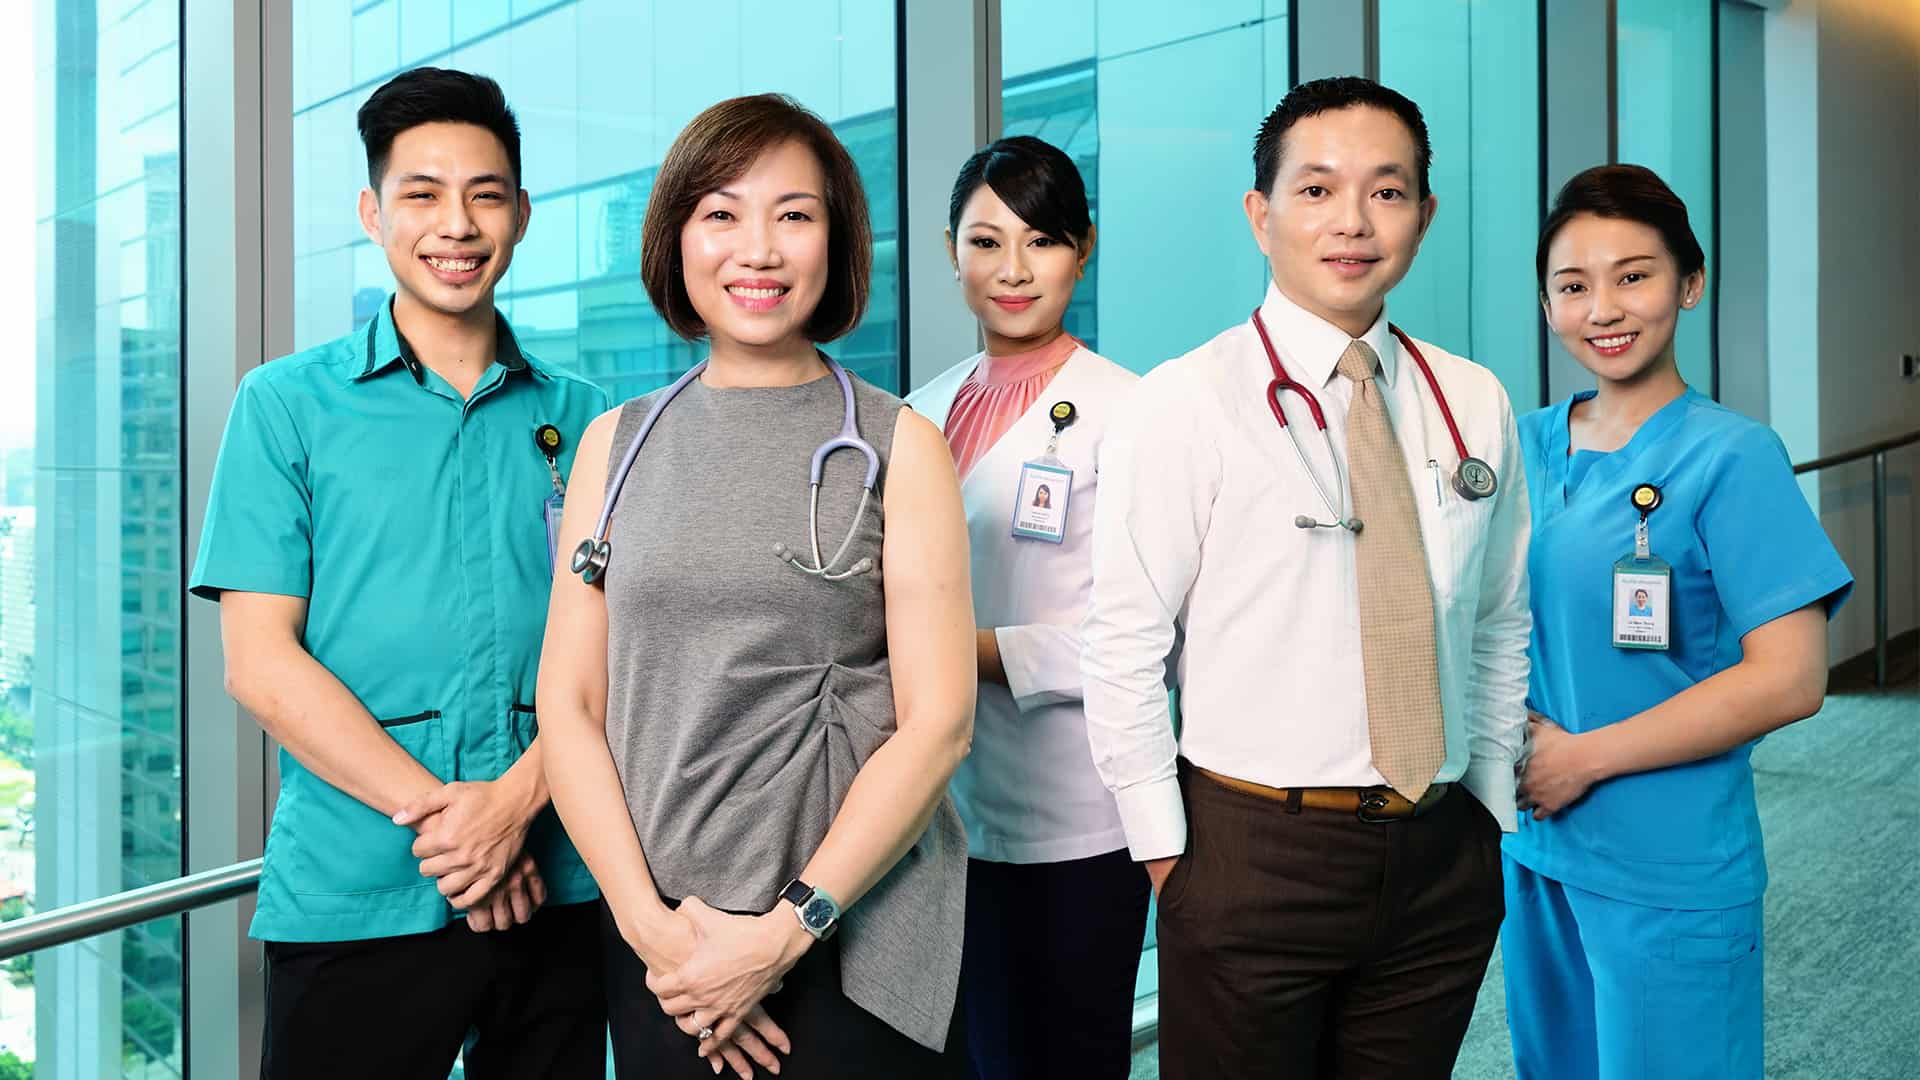 About Raffles Medical GP » Raffles Medical Group